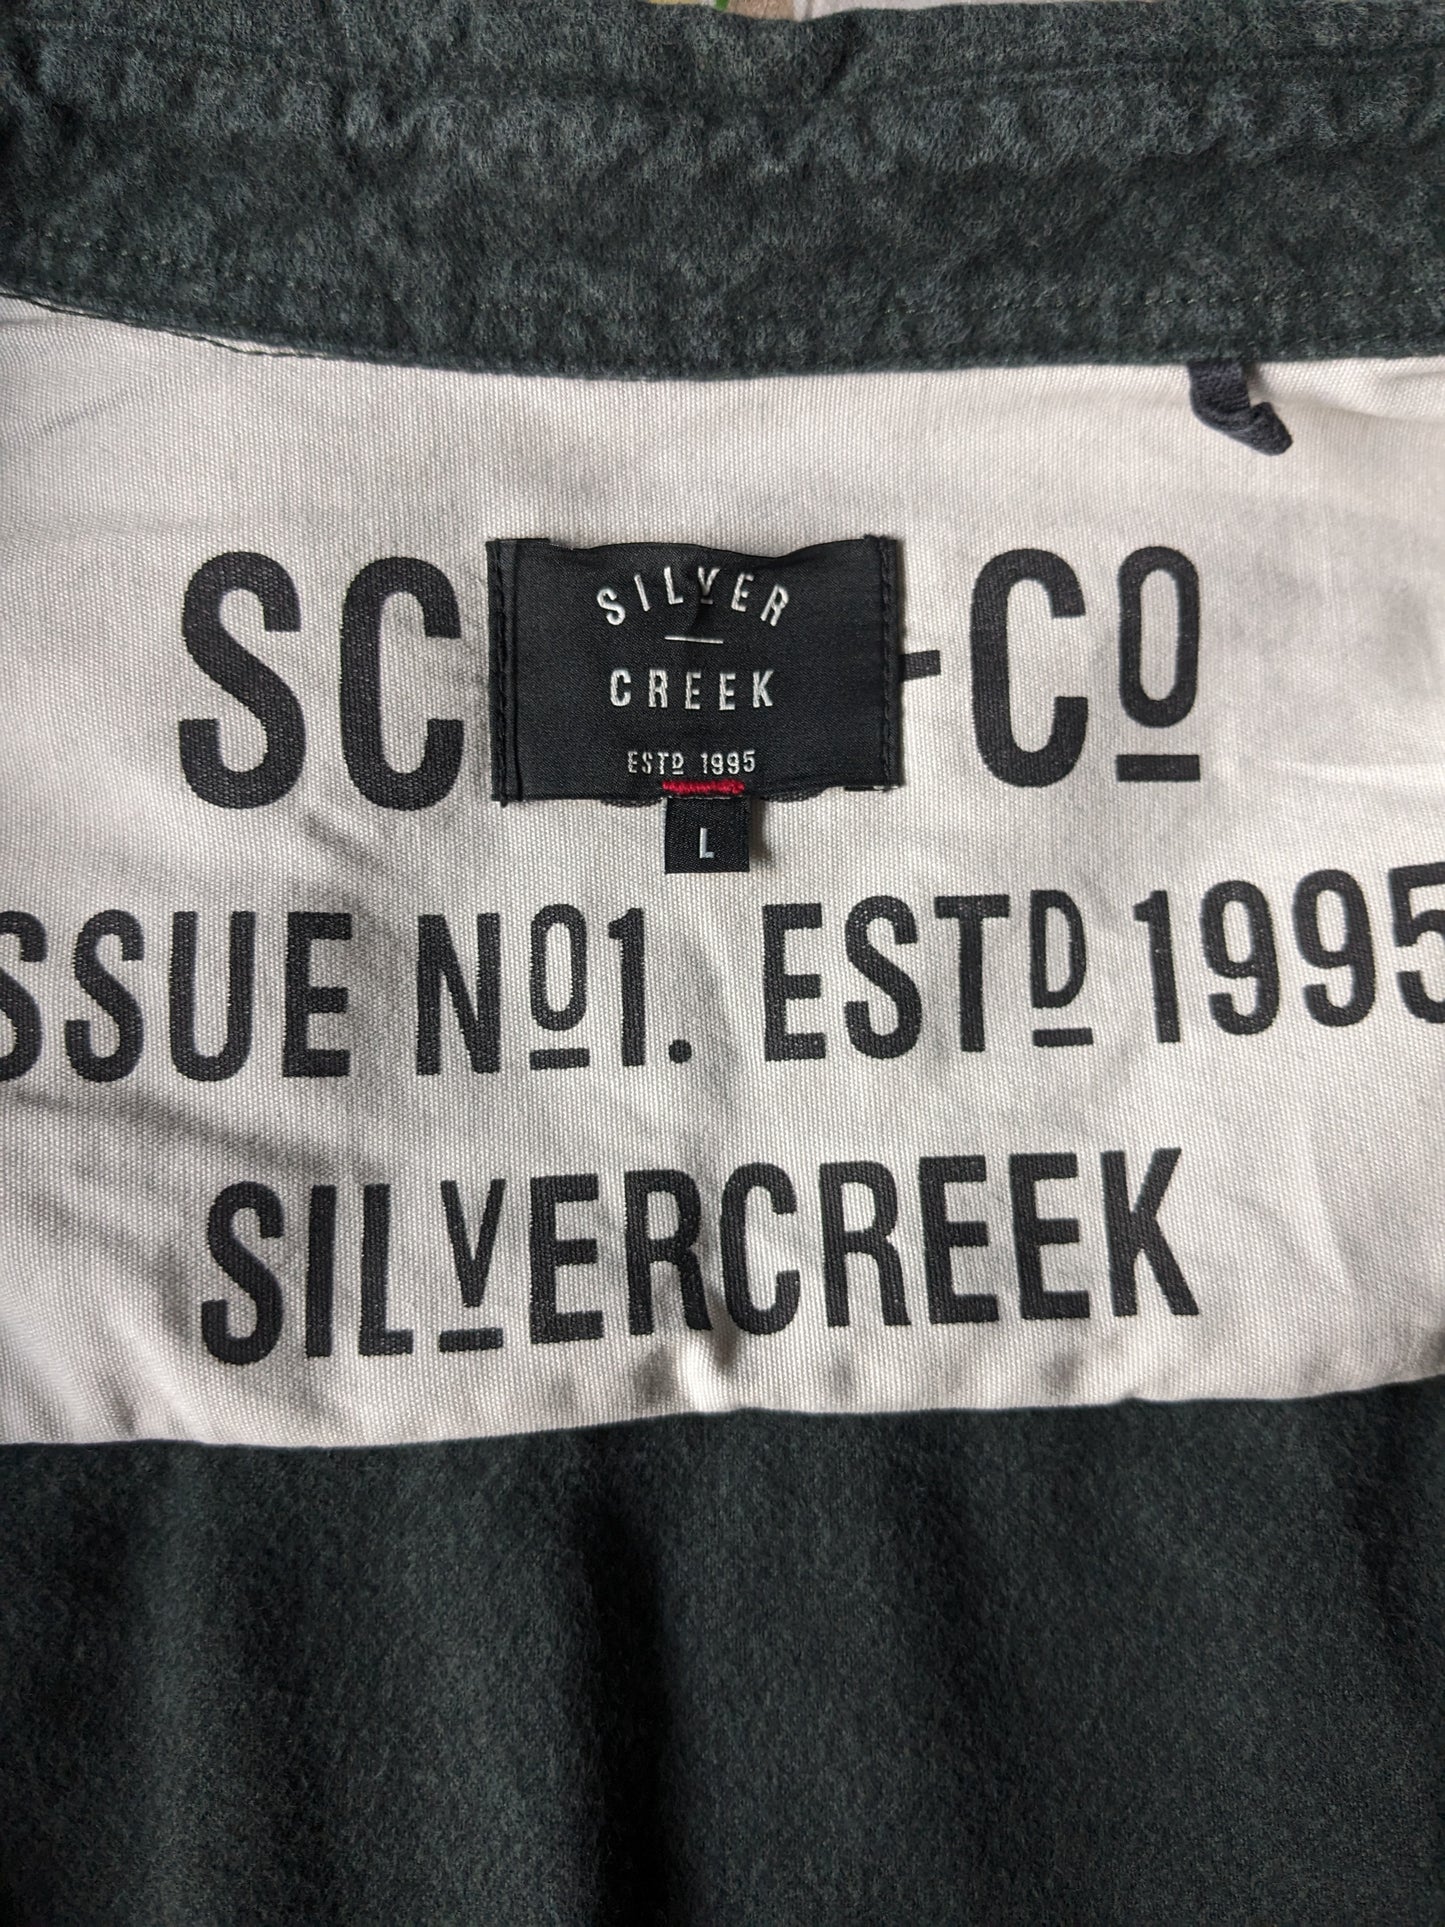 SilverCreek shirt. Dark green, somewhat thicker fabric. Size L.